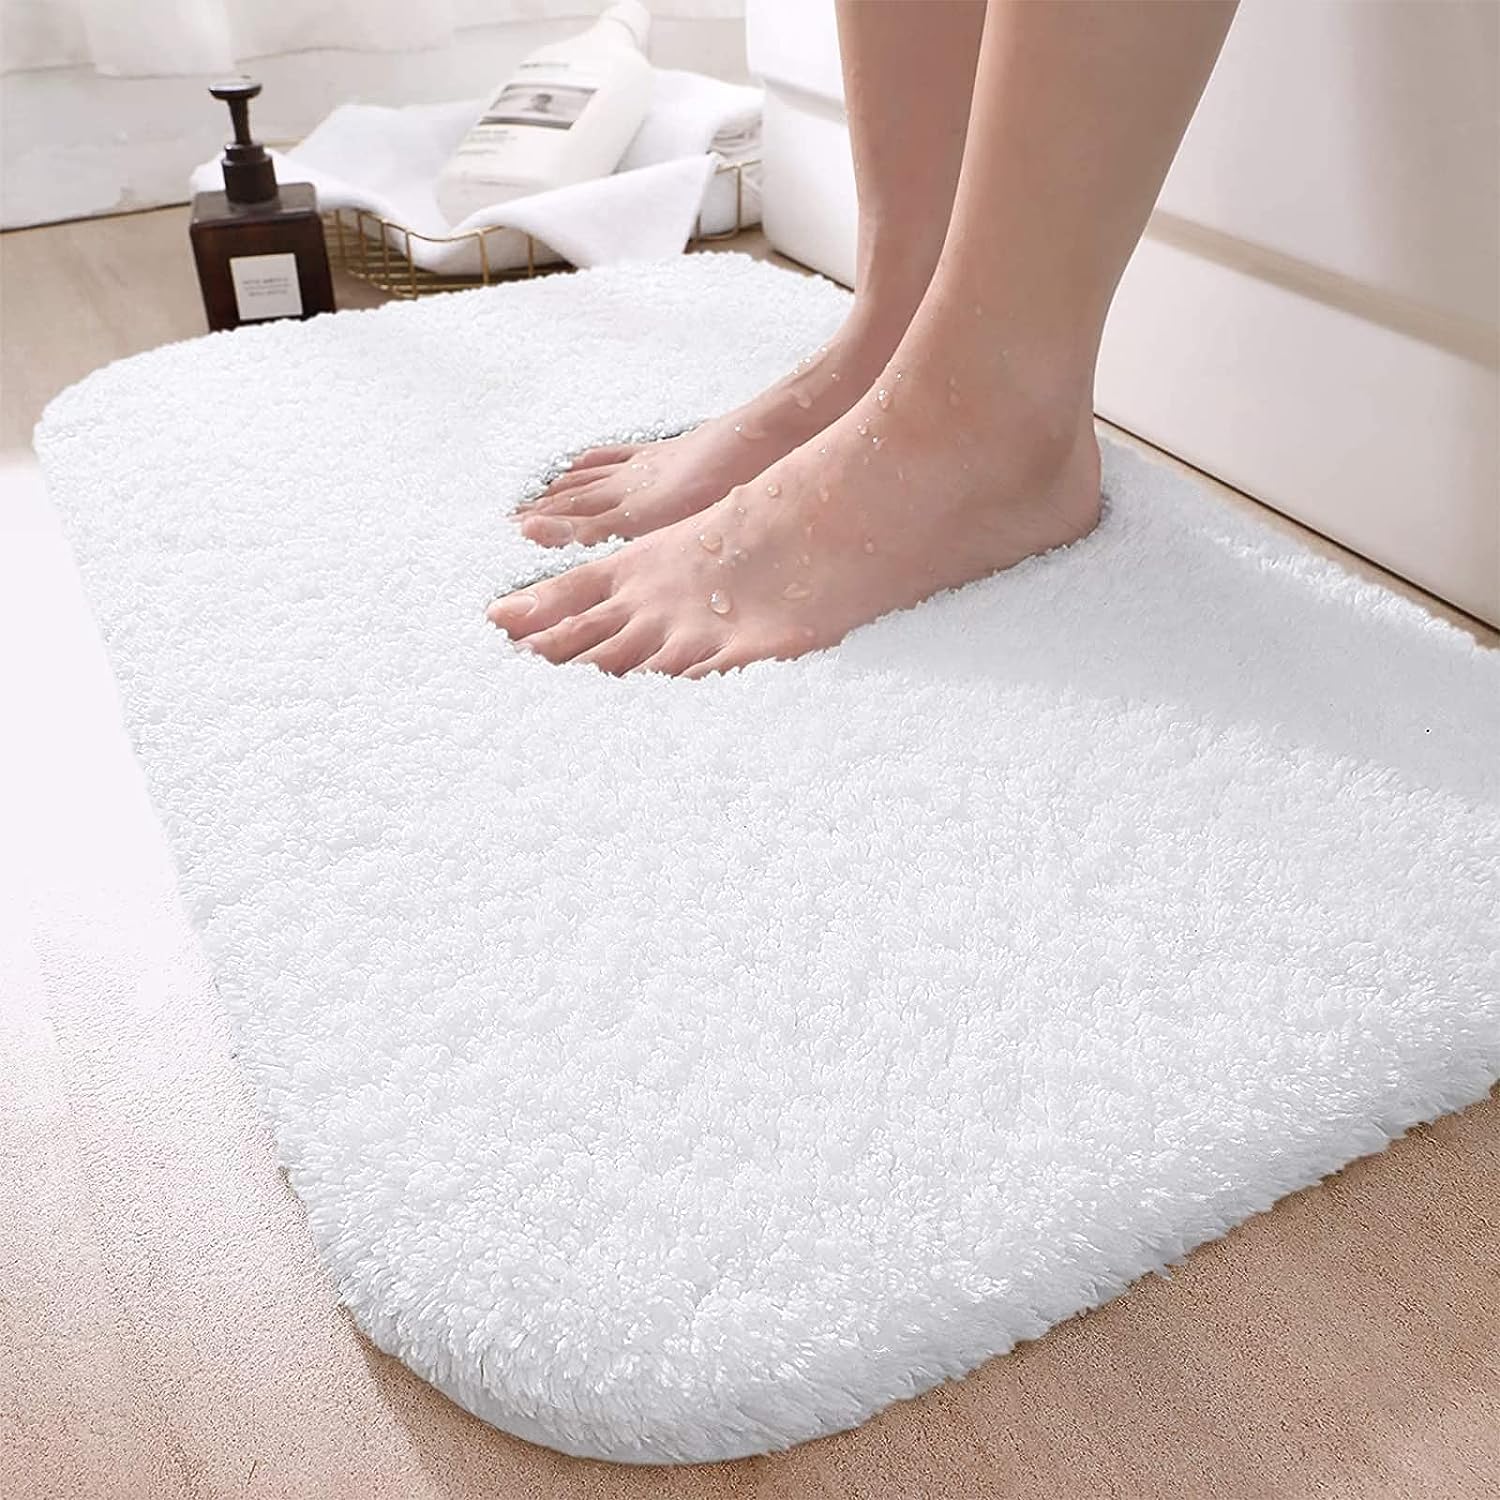 Bathroom Floor Mat